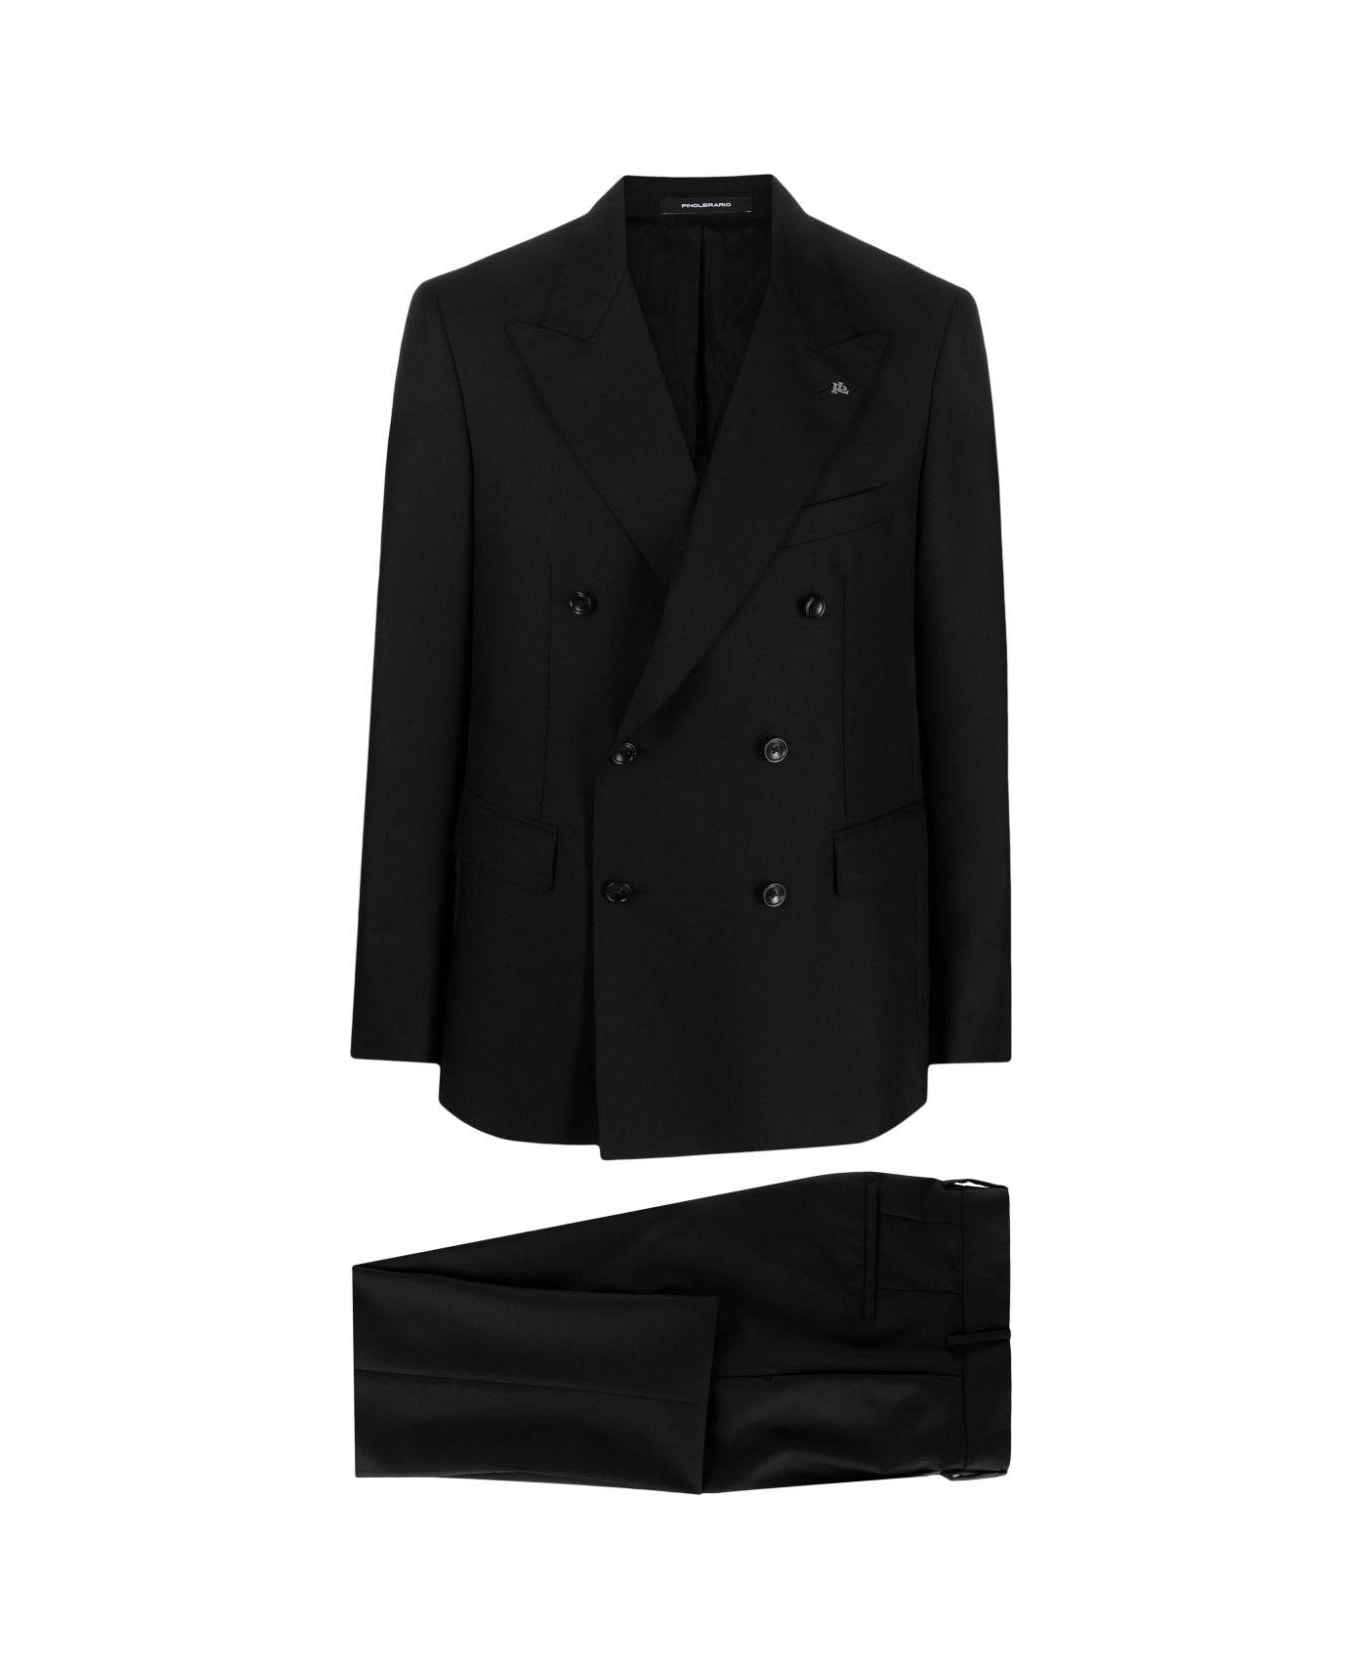 Tagliatore Double Breasted Suit - Black スーツ